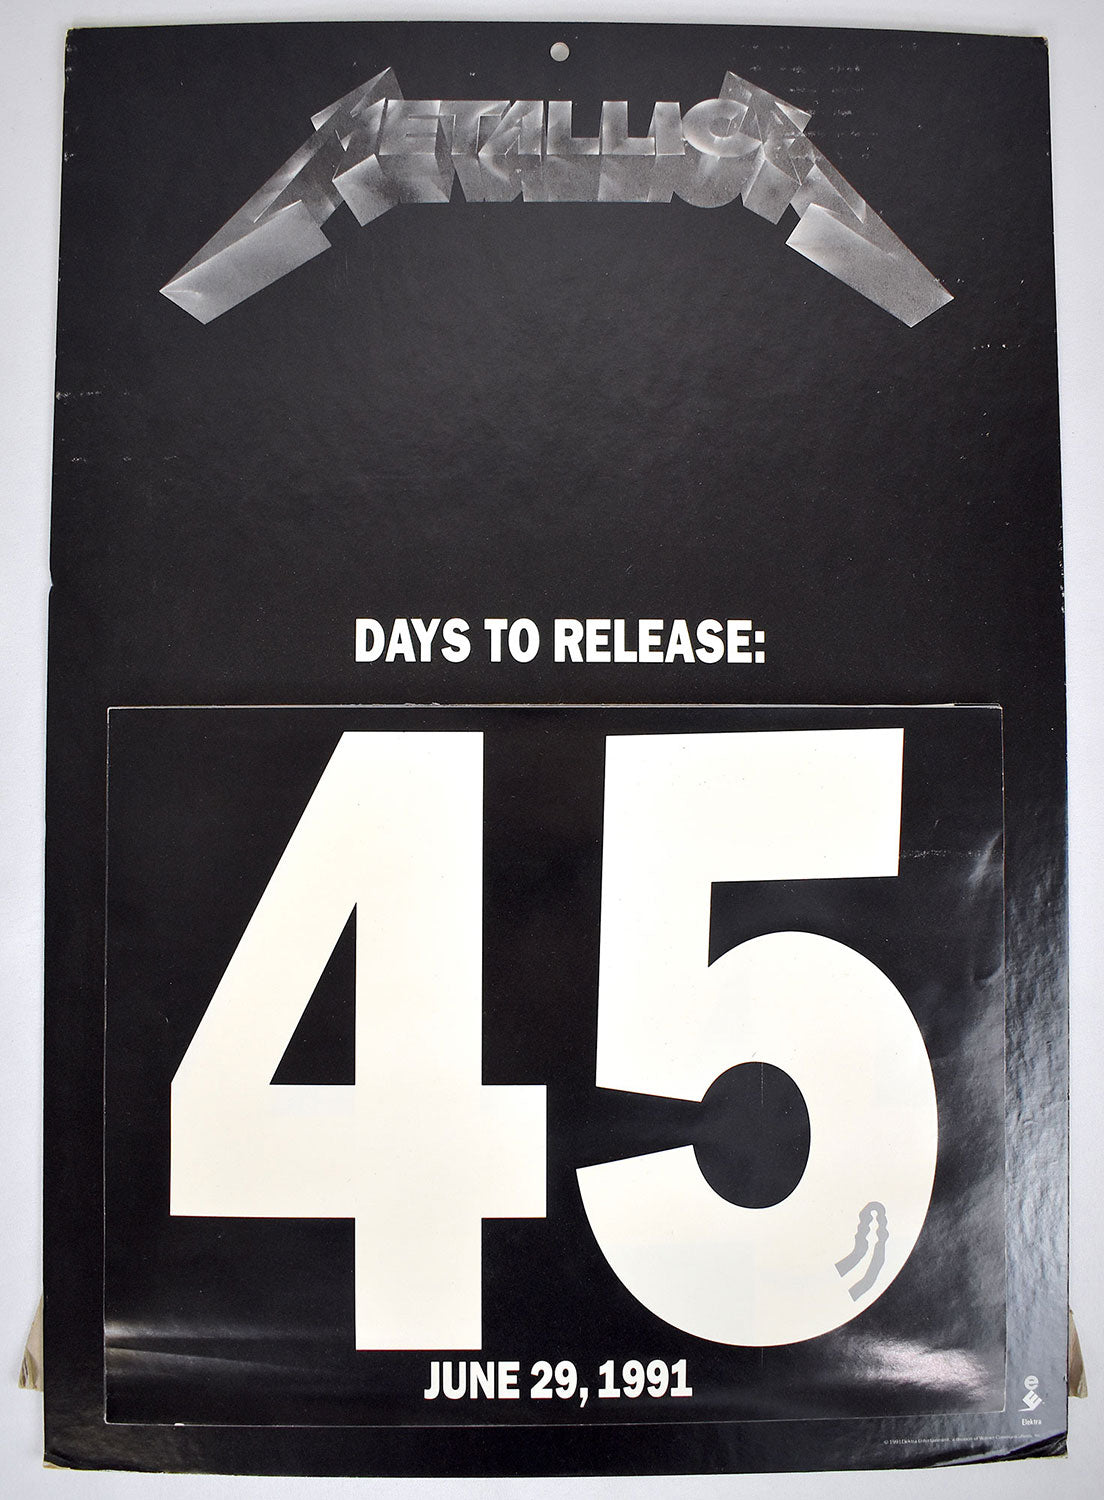 Record Store Countdown Calendar